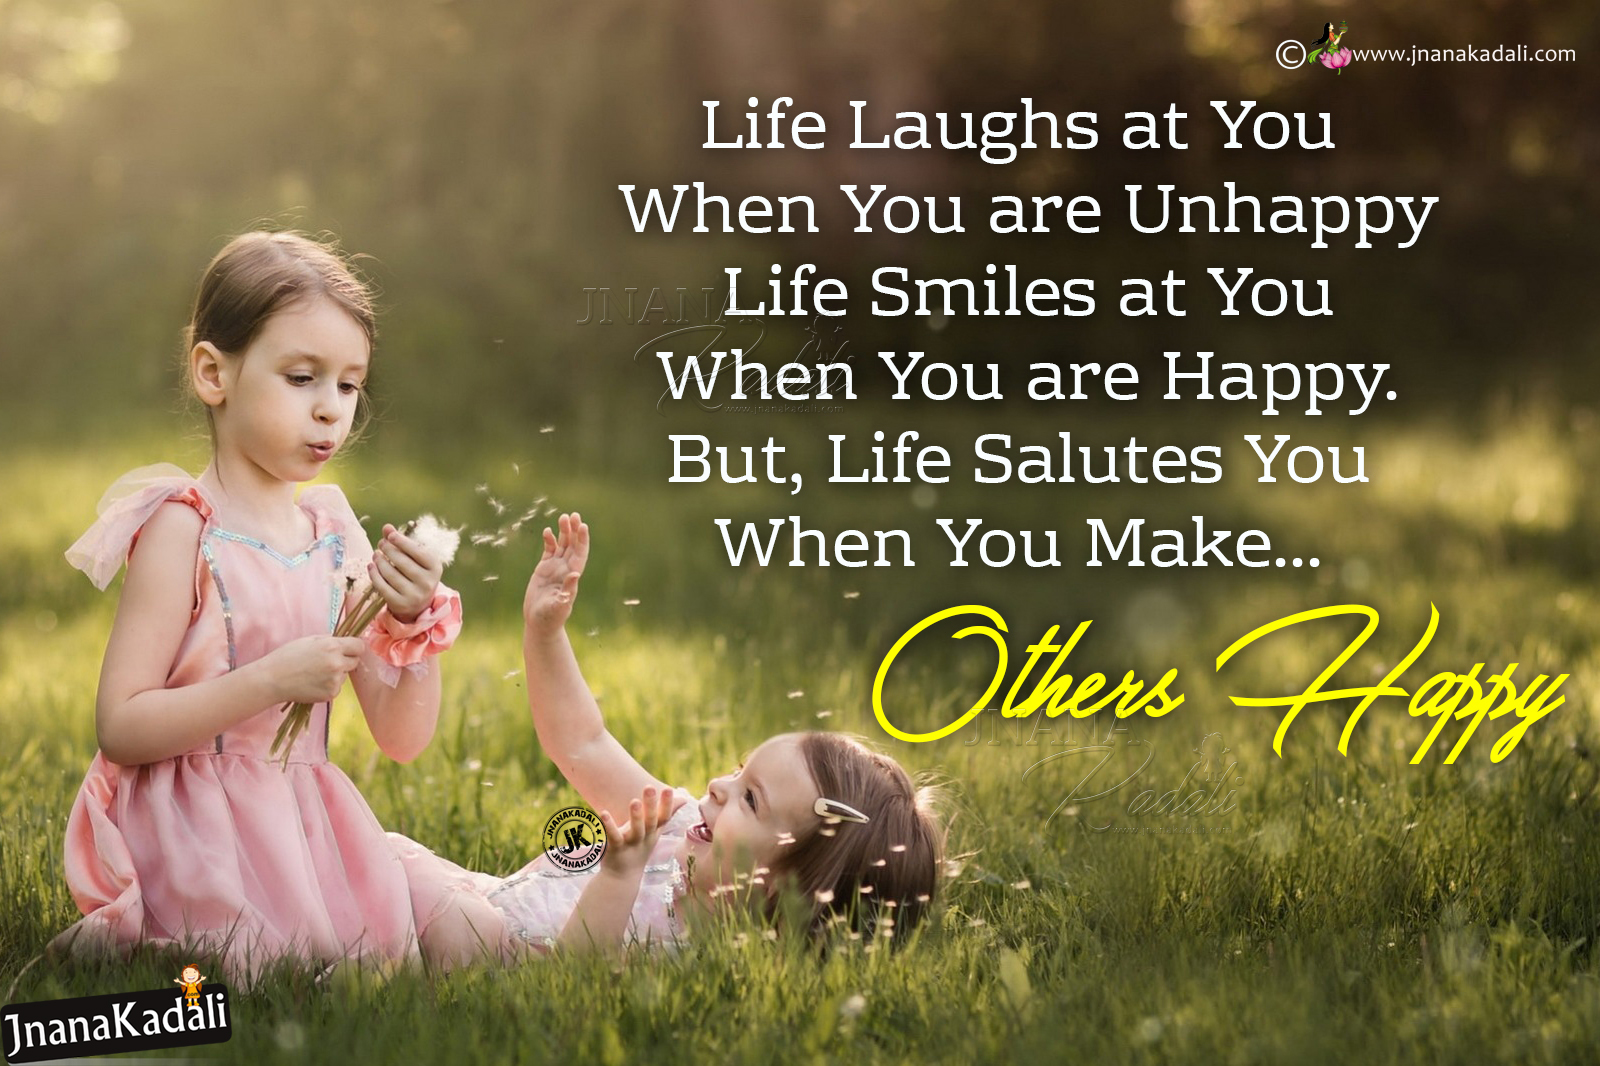 Short happy life. Quotes in English. Happy Life. Happiness quotes in English. Happy Life and unhappy.